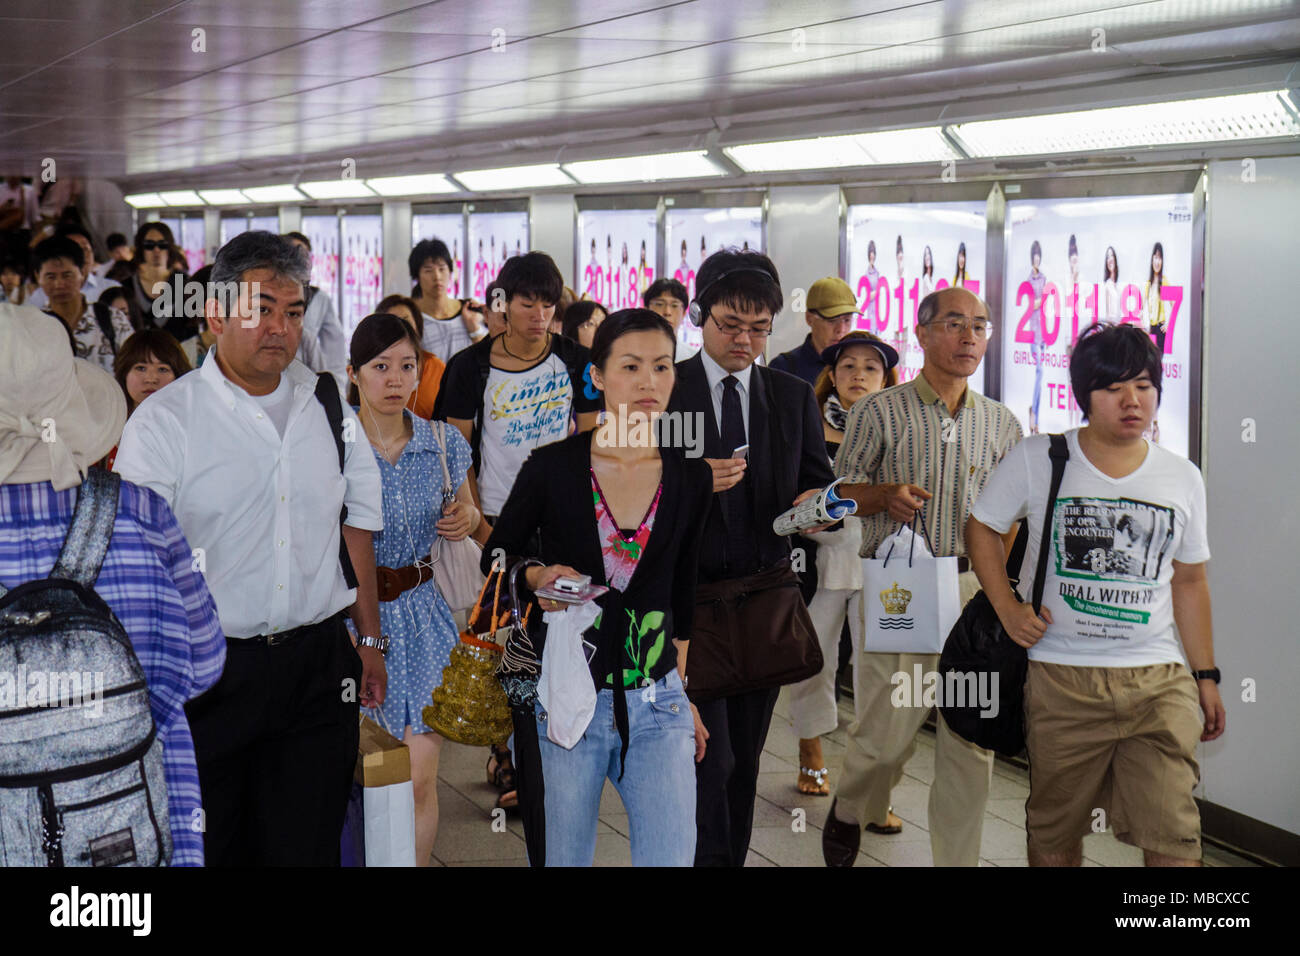 Tokyo Japan,Asia,Orient,Shinjuku,Shinjuku Station,subway,train,train,train,passenger passengers rider riders,Asian Asians ethnic immigrant immigrants Stock Photo